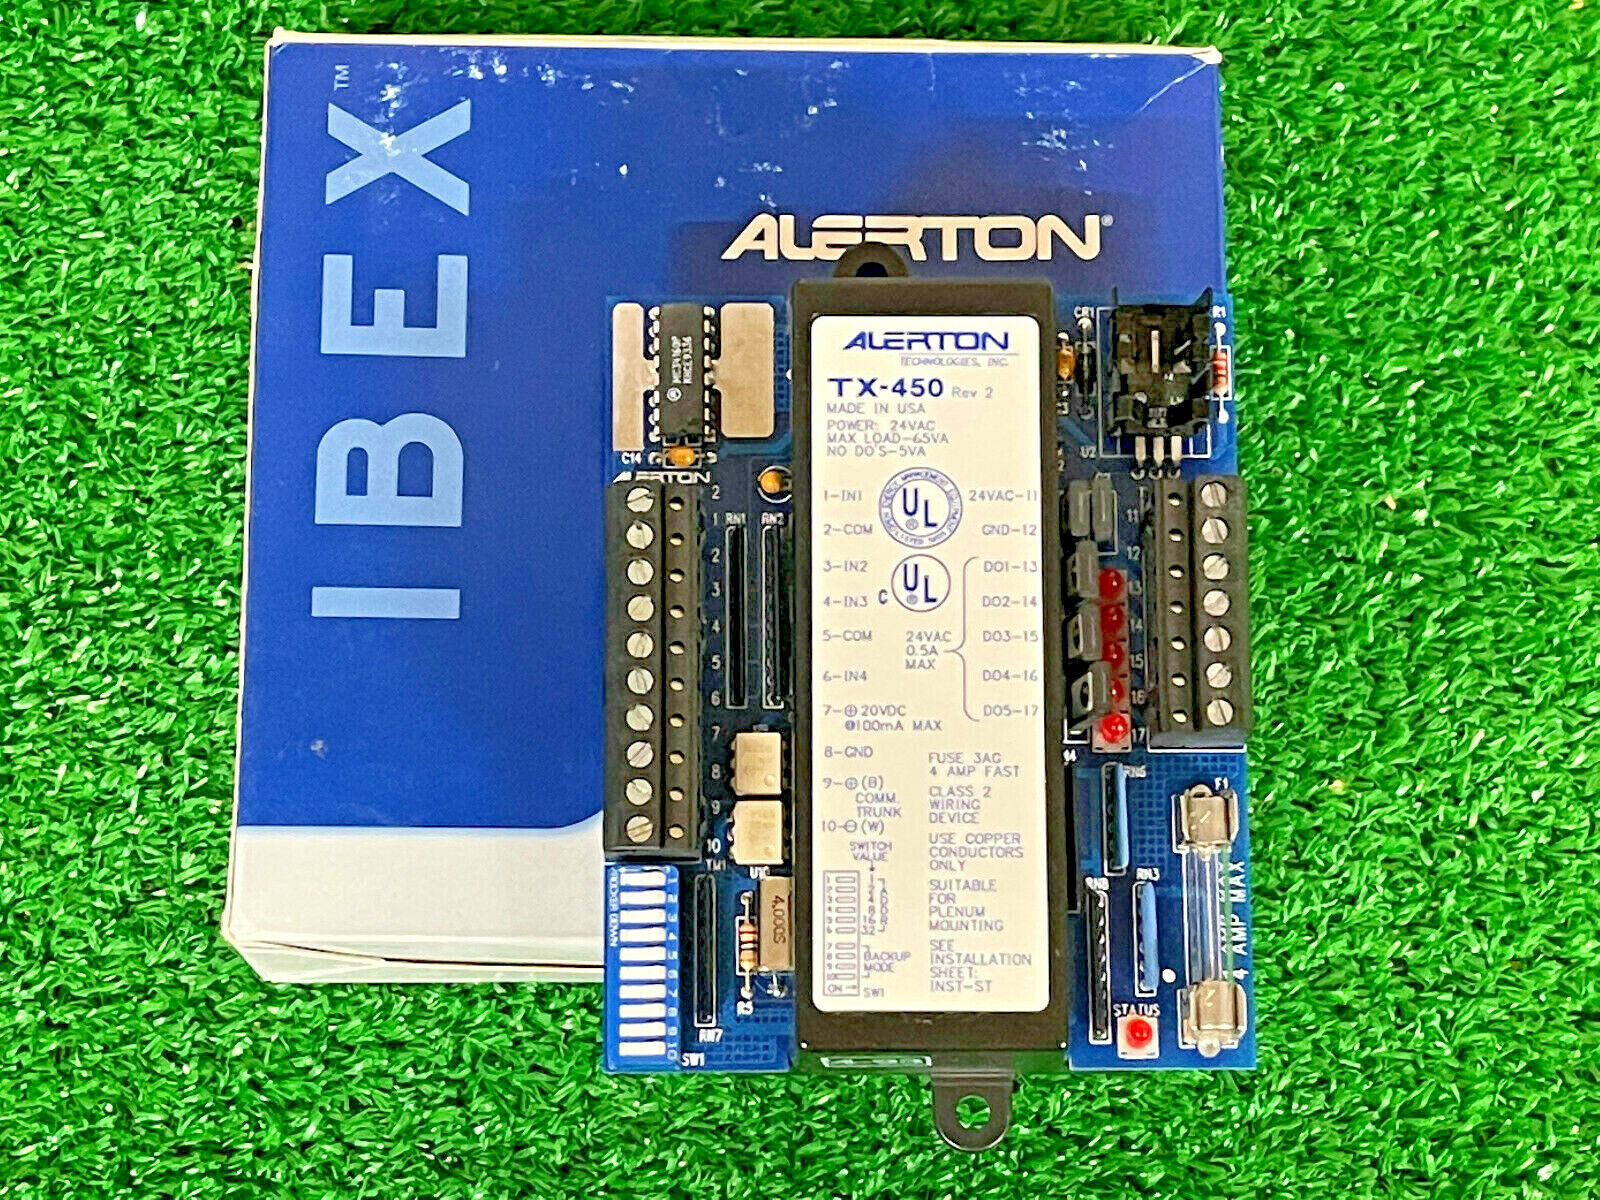 Alerton Ibex TX-450 DDC Programmable Controller, V2.05, TX450, Rev 2